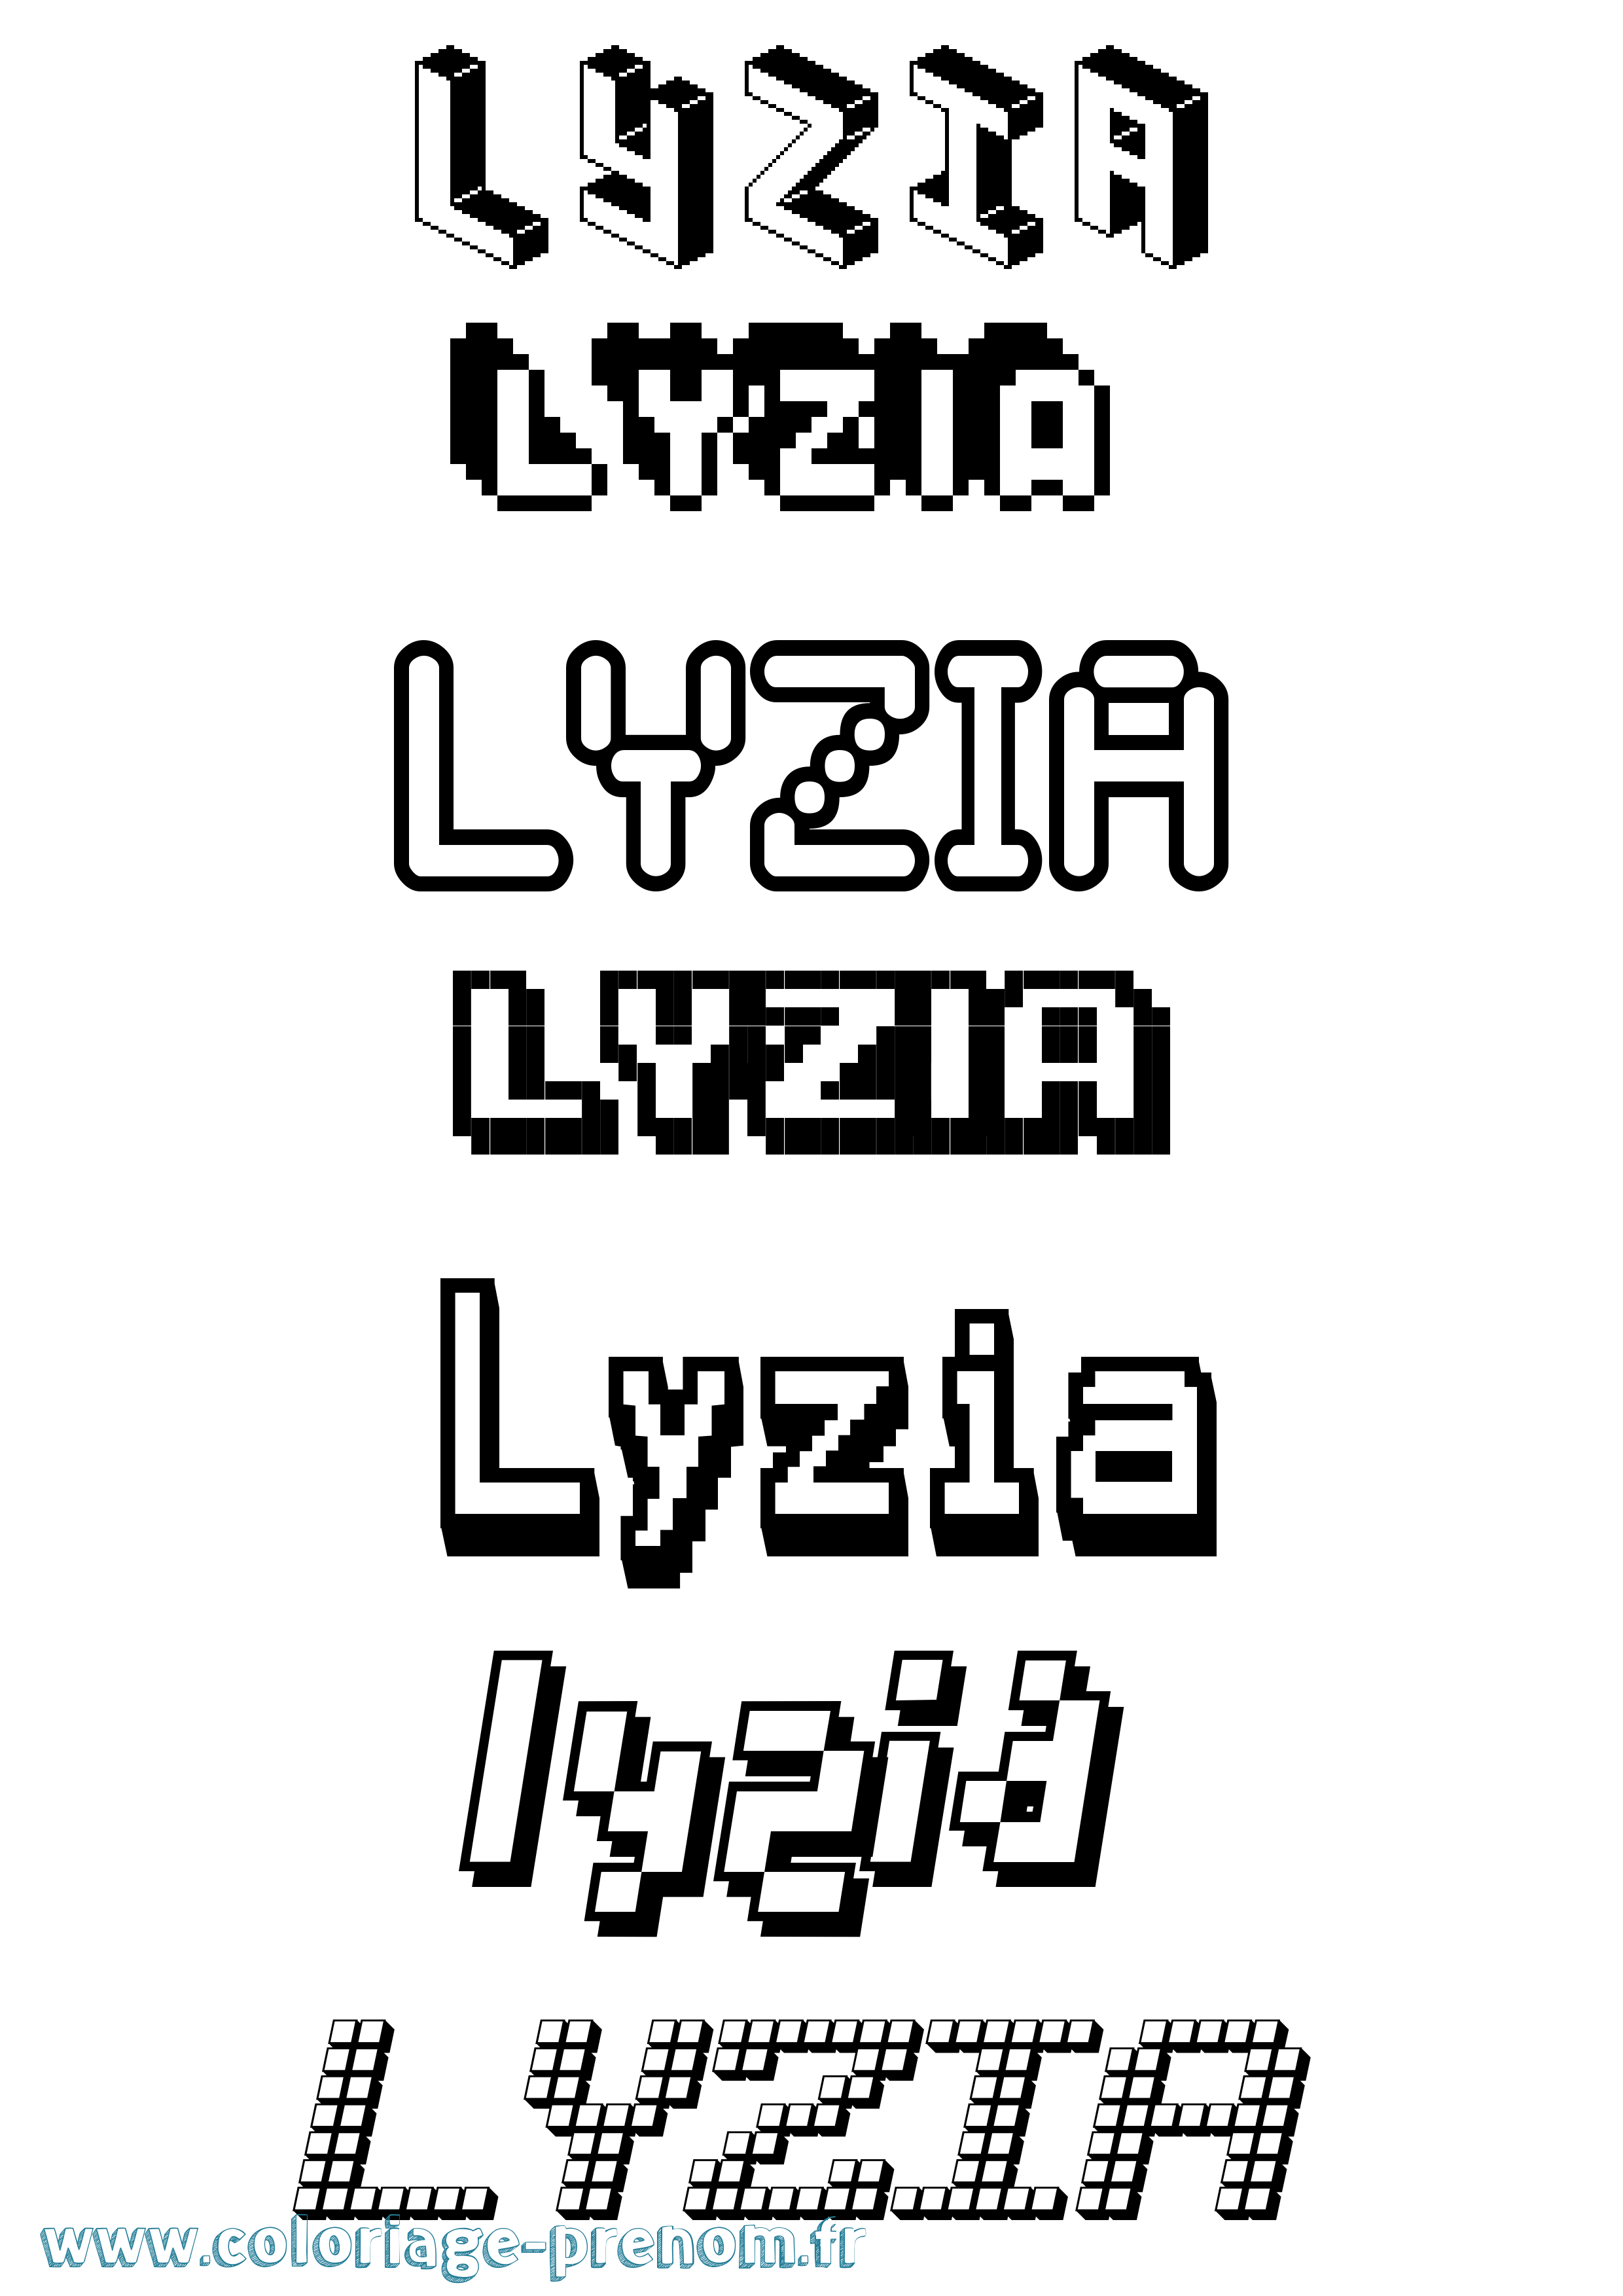 Coloriage prénom Lyzia Pixel